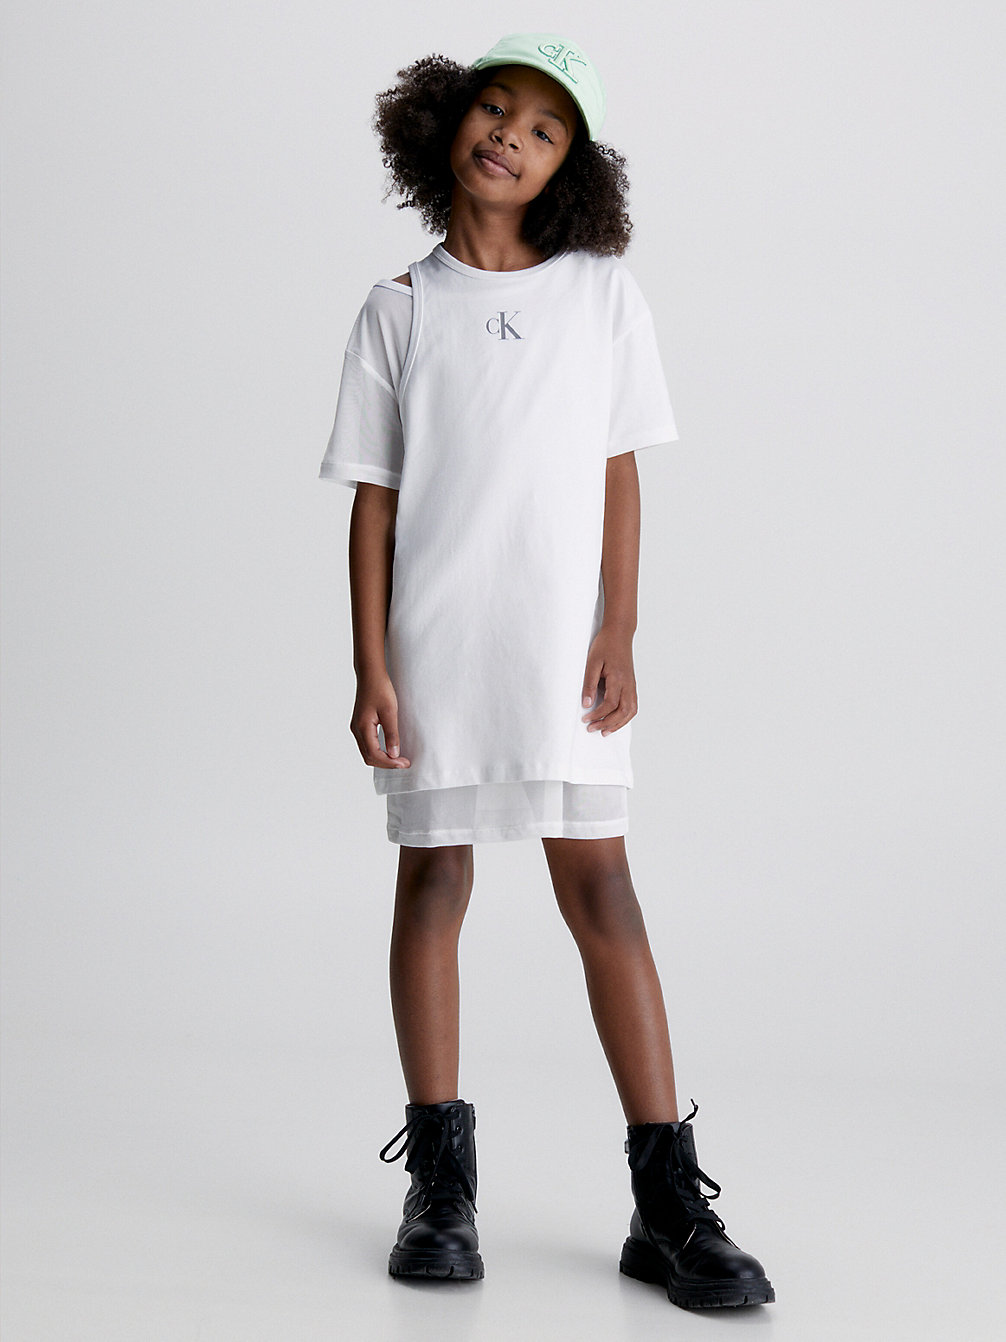 BRIGHT WHITE Slim Layered Mesh T-Shirt Dress undefined girls Calvin Klein